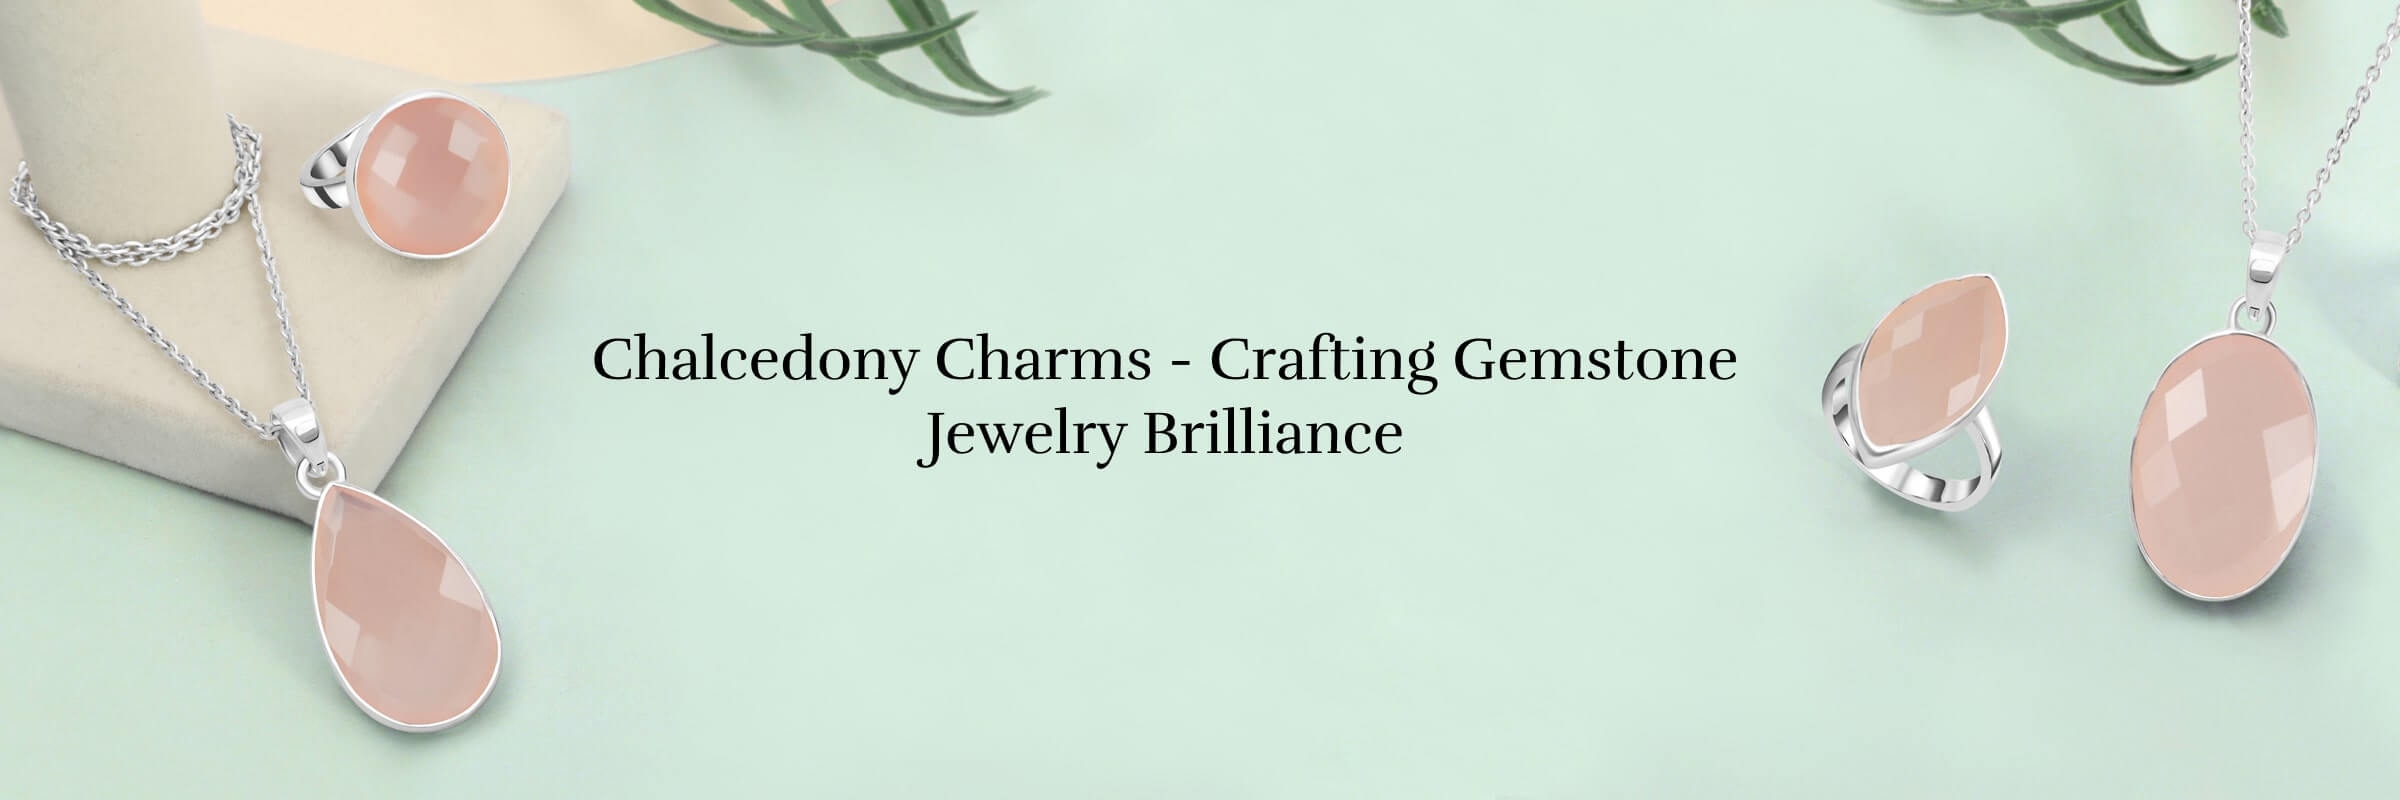 How to use Chalcedony as Gemstone Jewelry